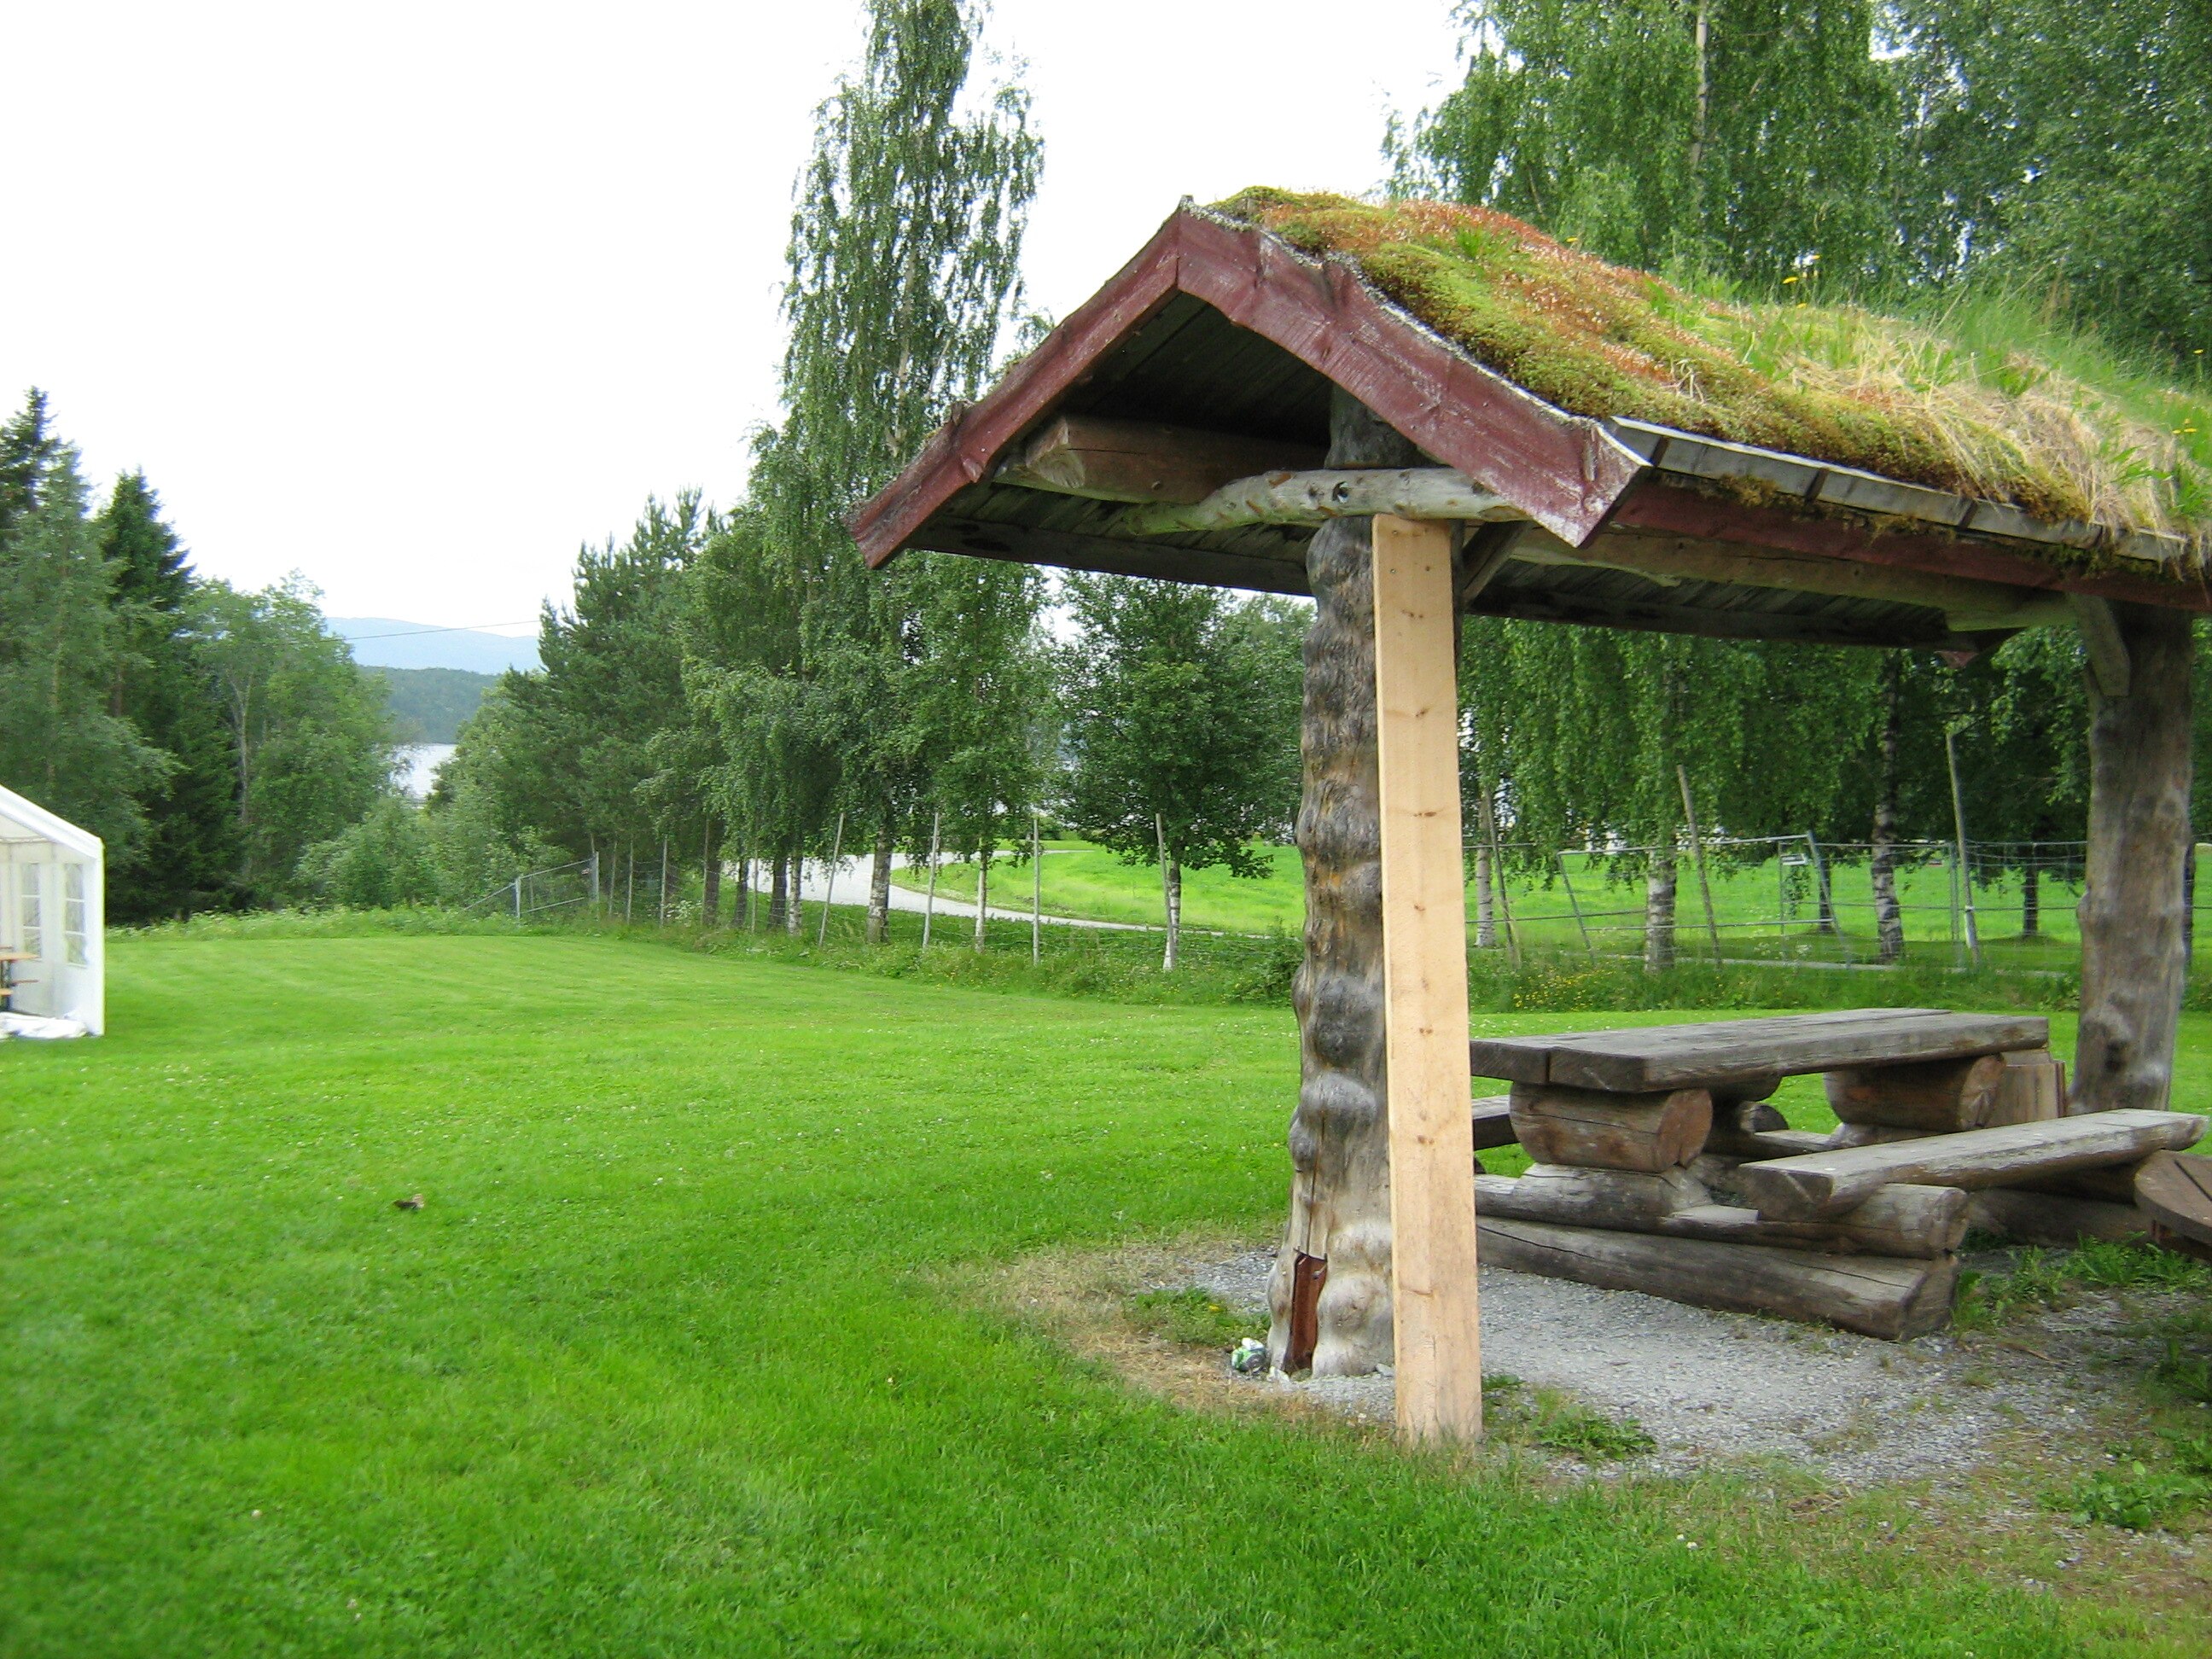 Snåsa Hotell & Camp